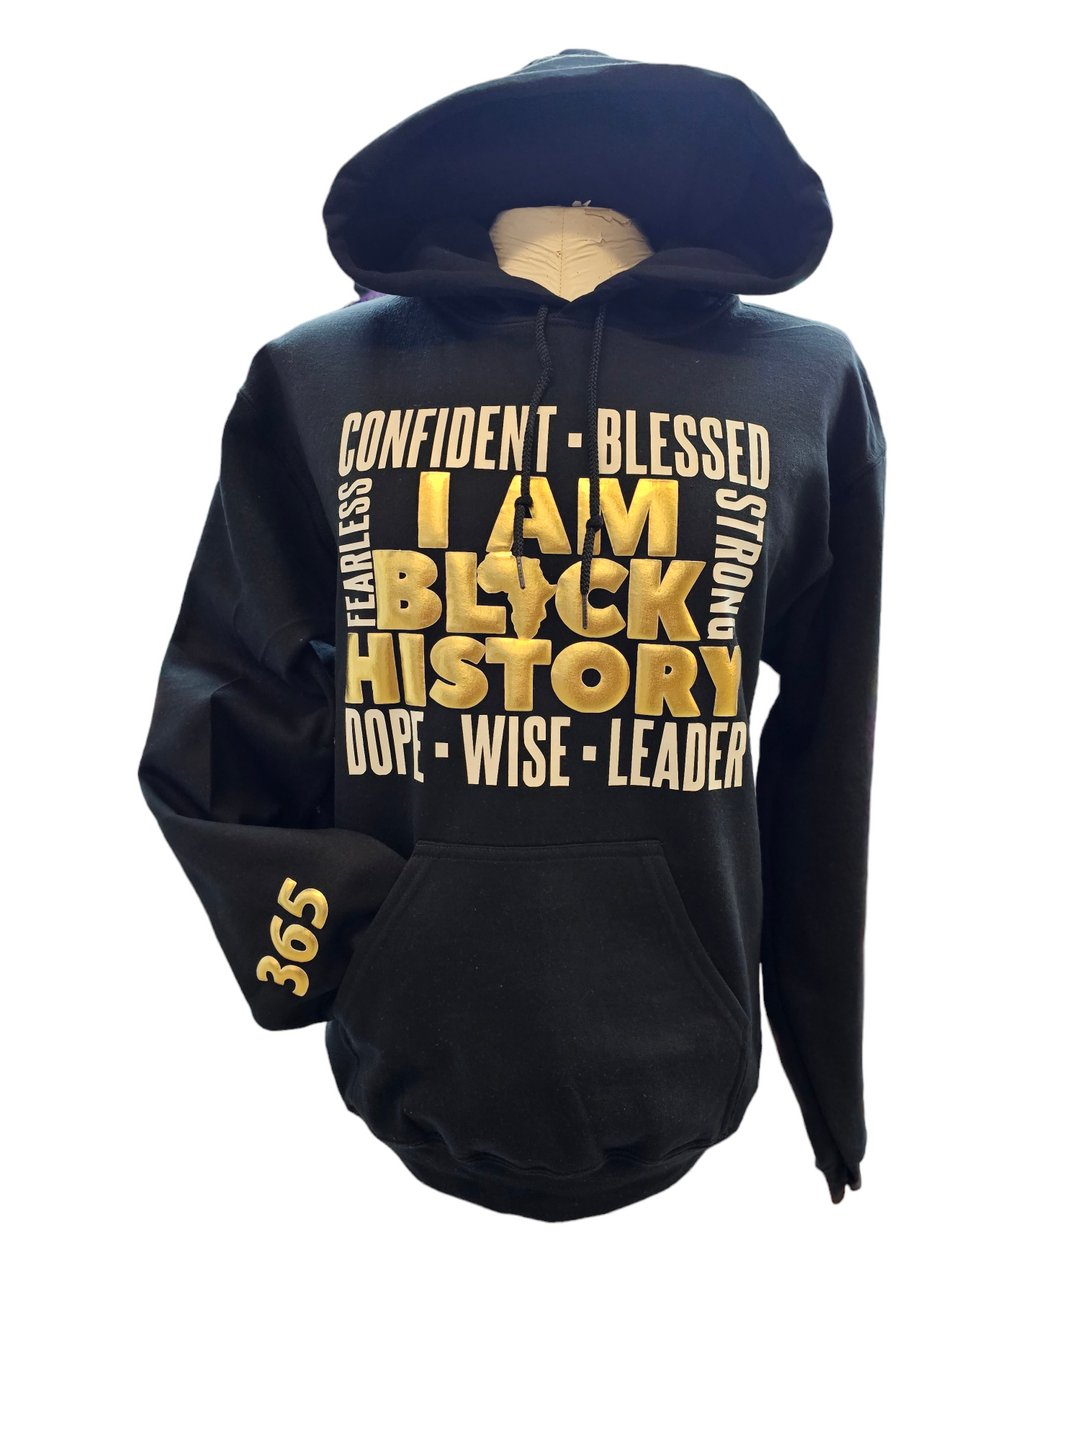 Black and Gold "I am black history" Puff print hooded sweatshirt